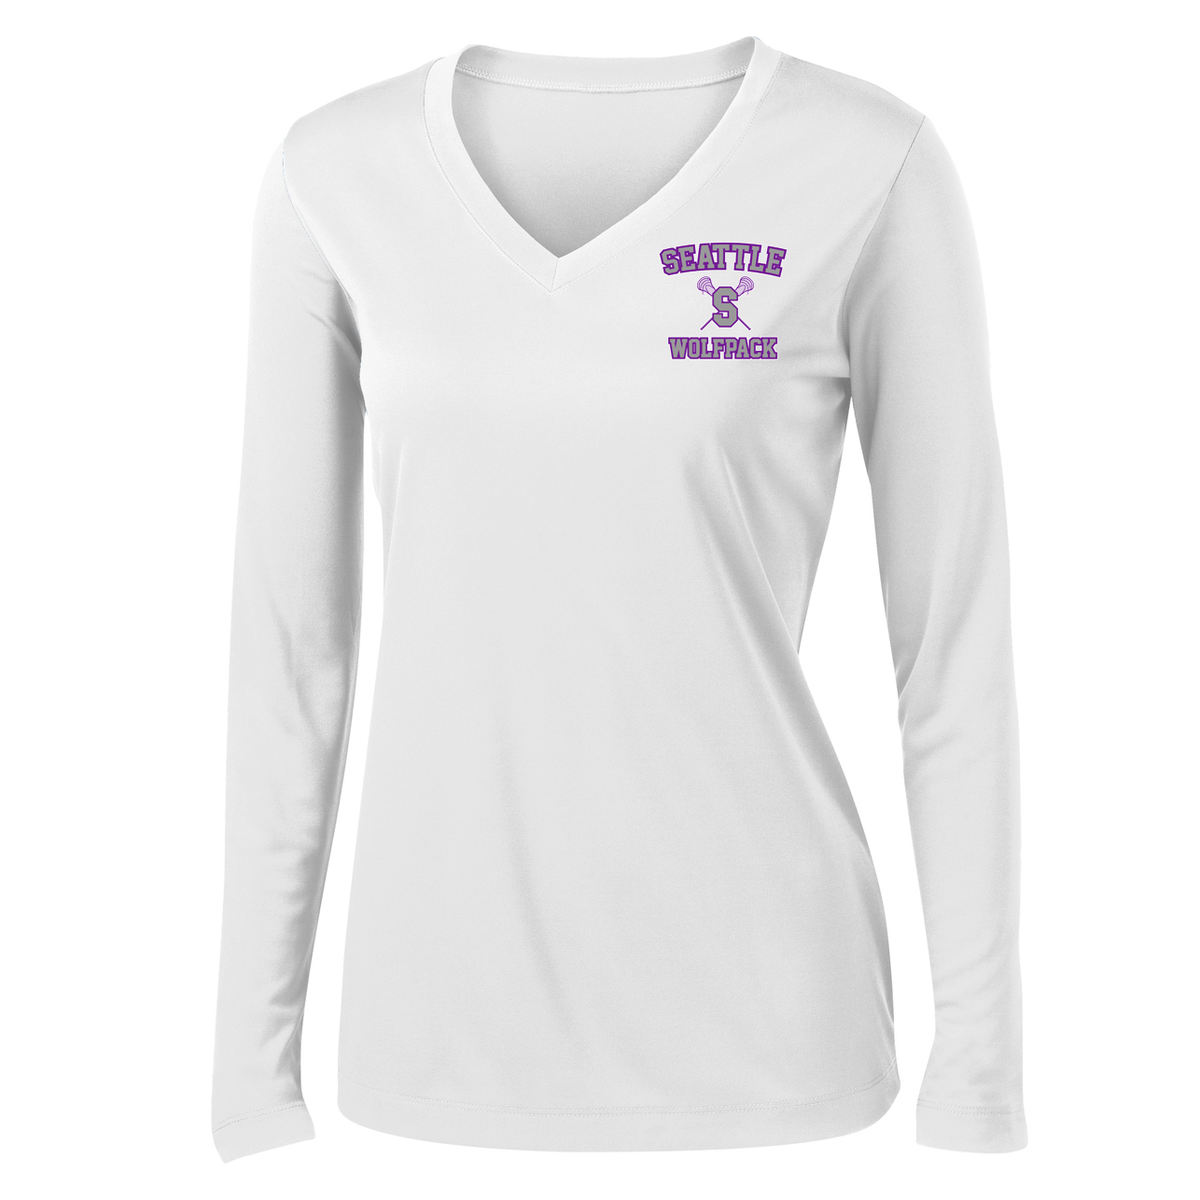 Seattle Wolfpack Women's Long Sleeve Performance Shirt